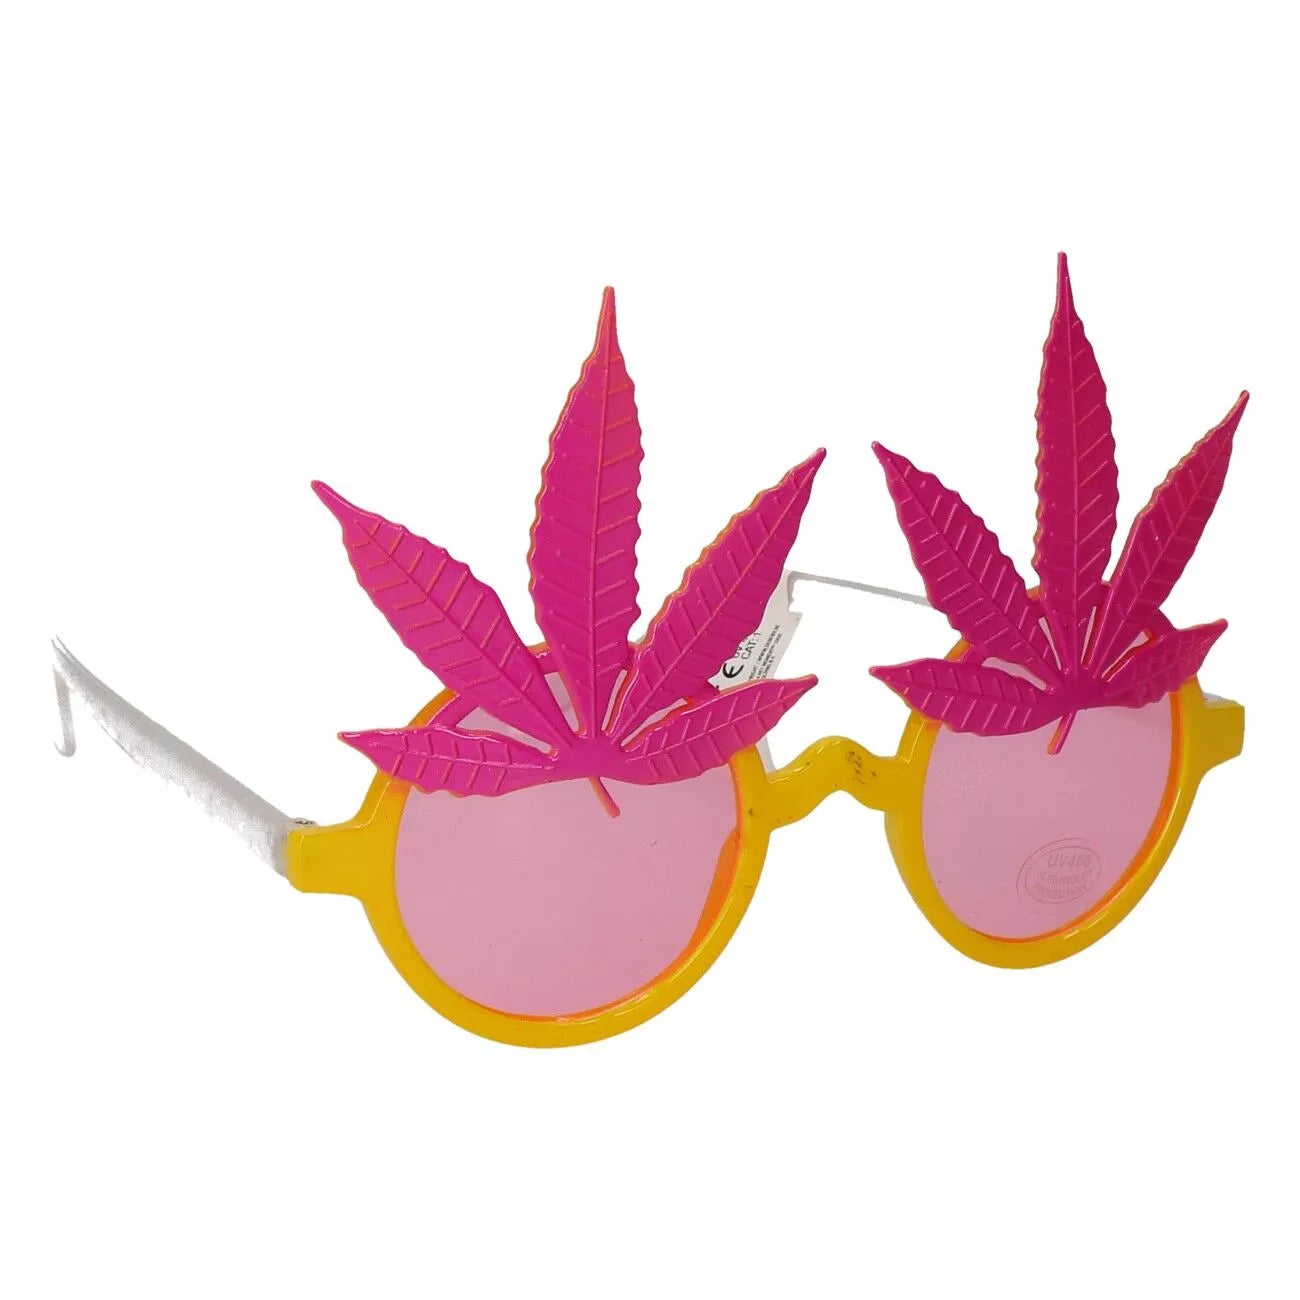 The Canna Sunglasses / De Canna Zonnebril